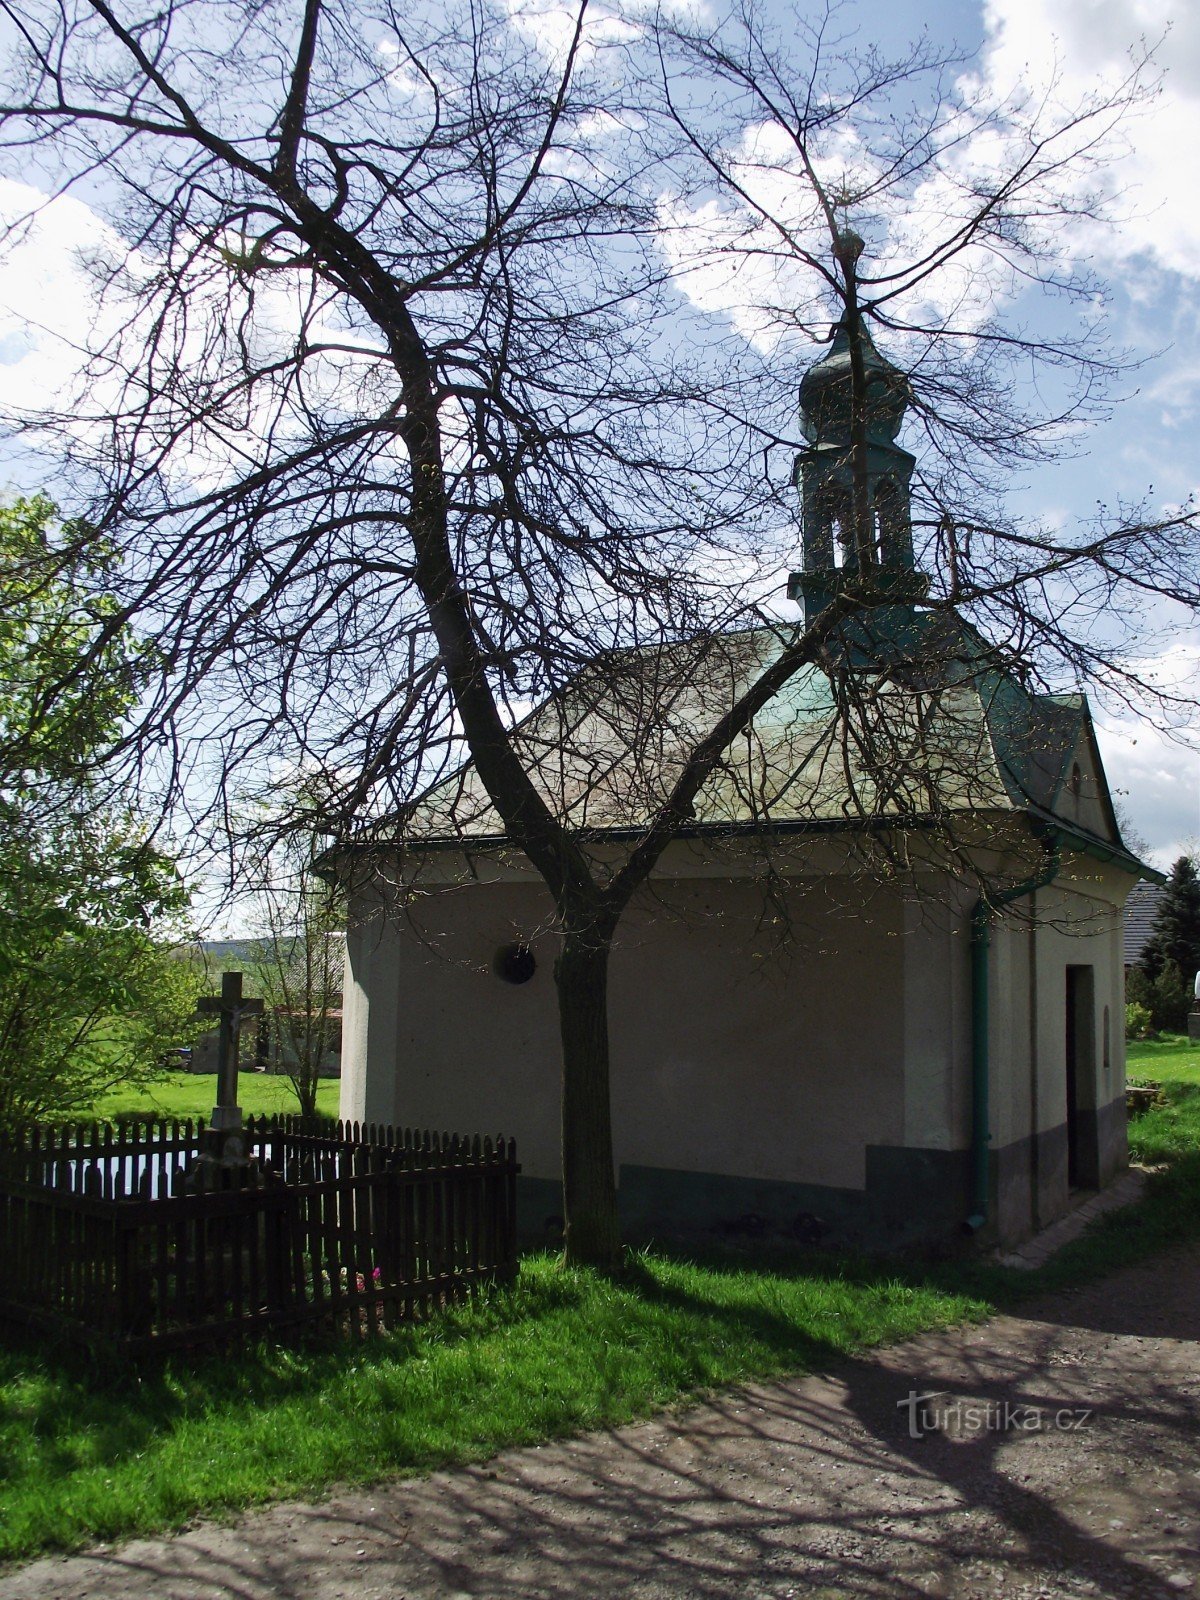 capilla del balneario con una cruz